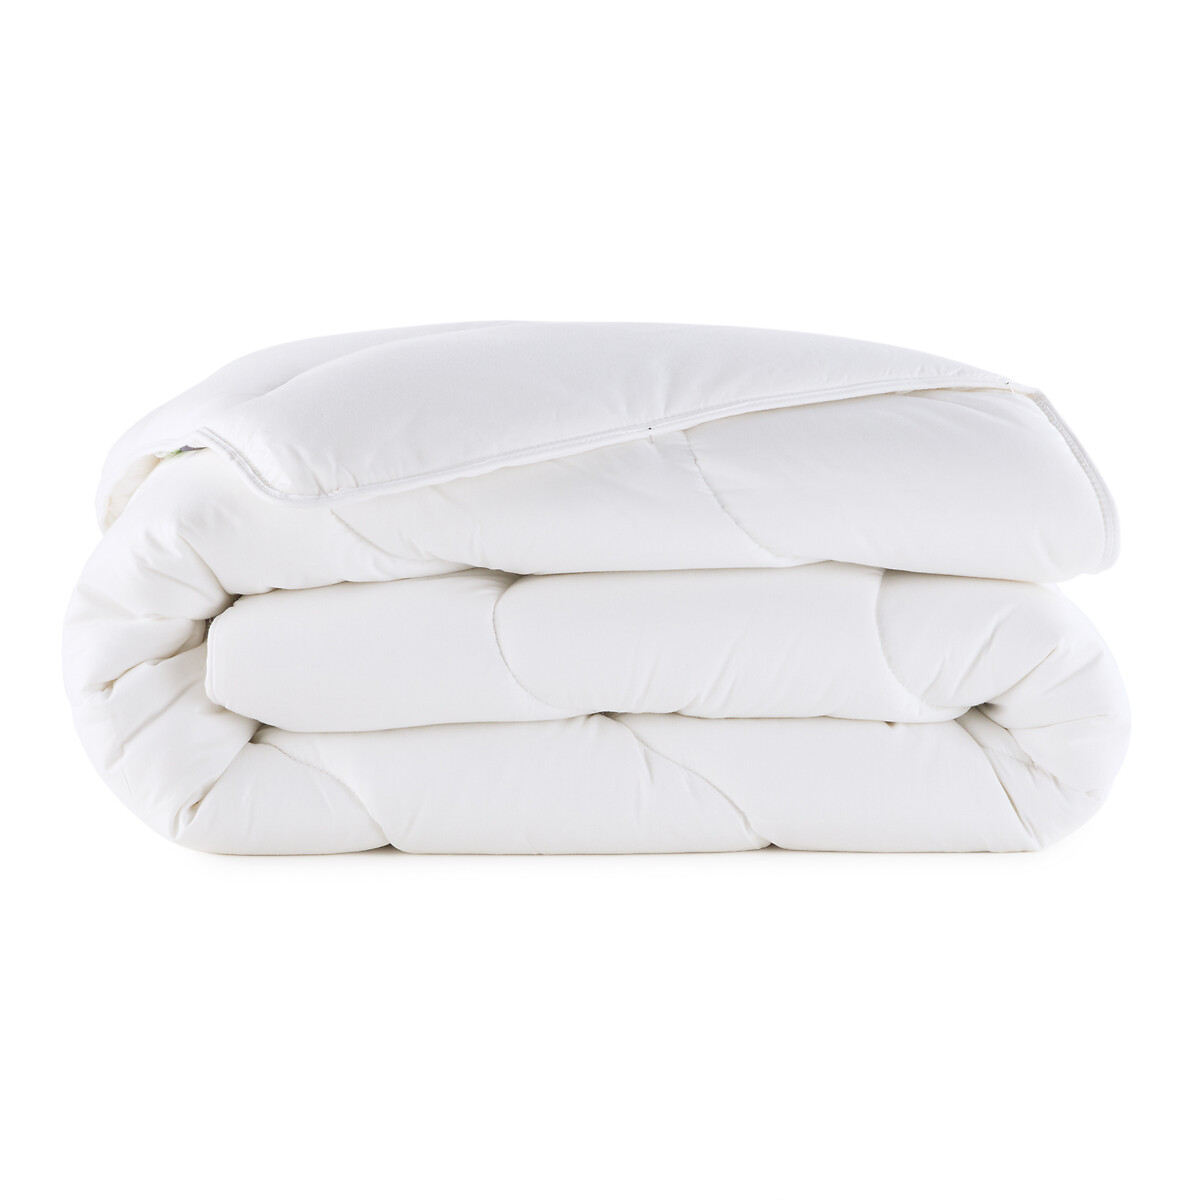 Одеяло Средней плотности из синтетики 300 гм 140 x 200 см белый LaRedoute, размер 140 x 200 см - фото 1